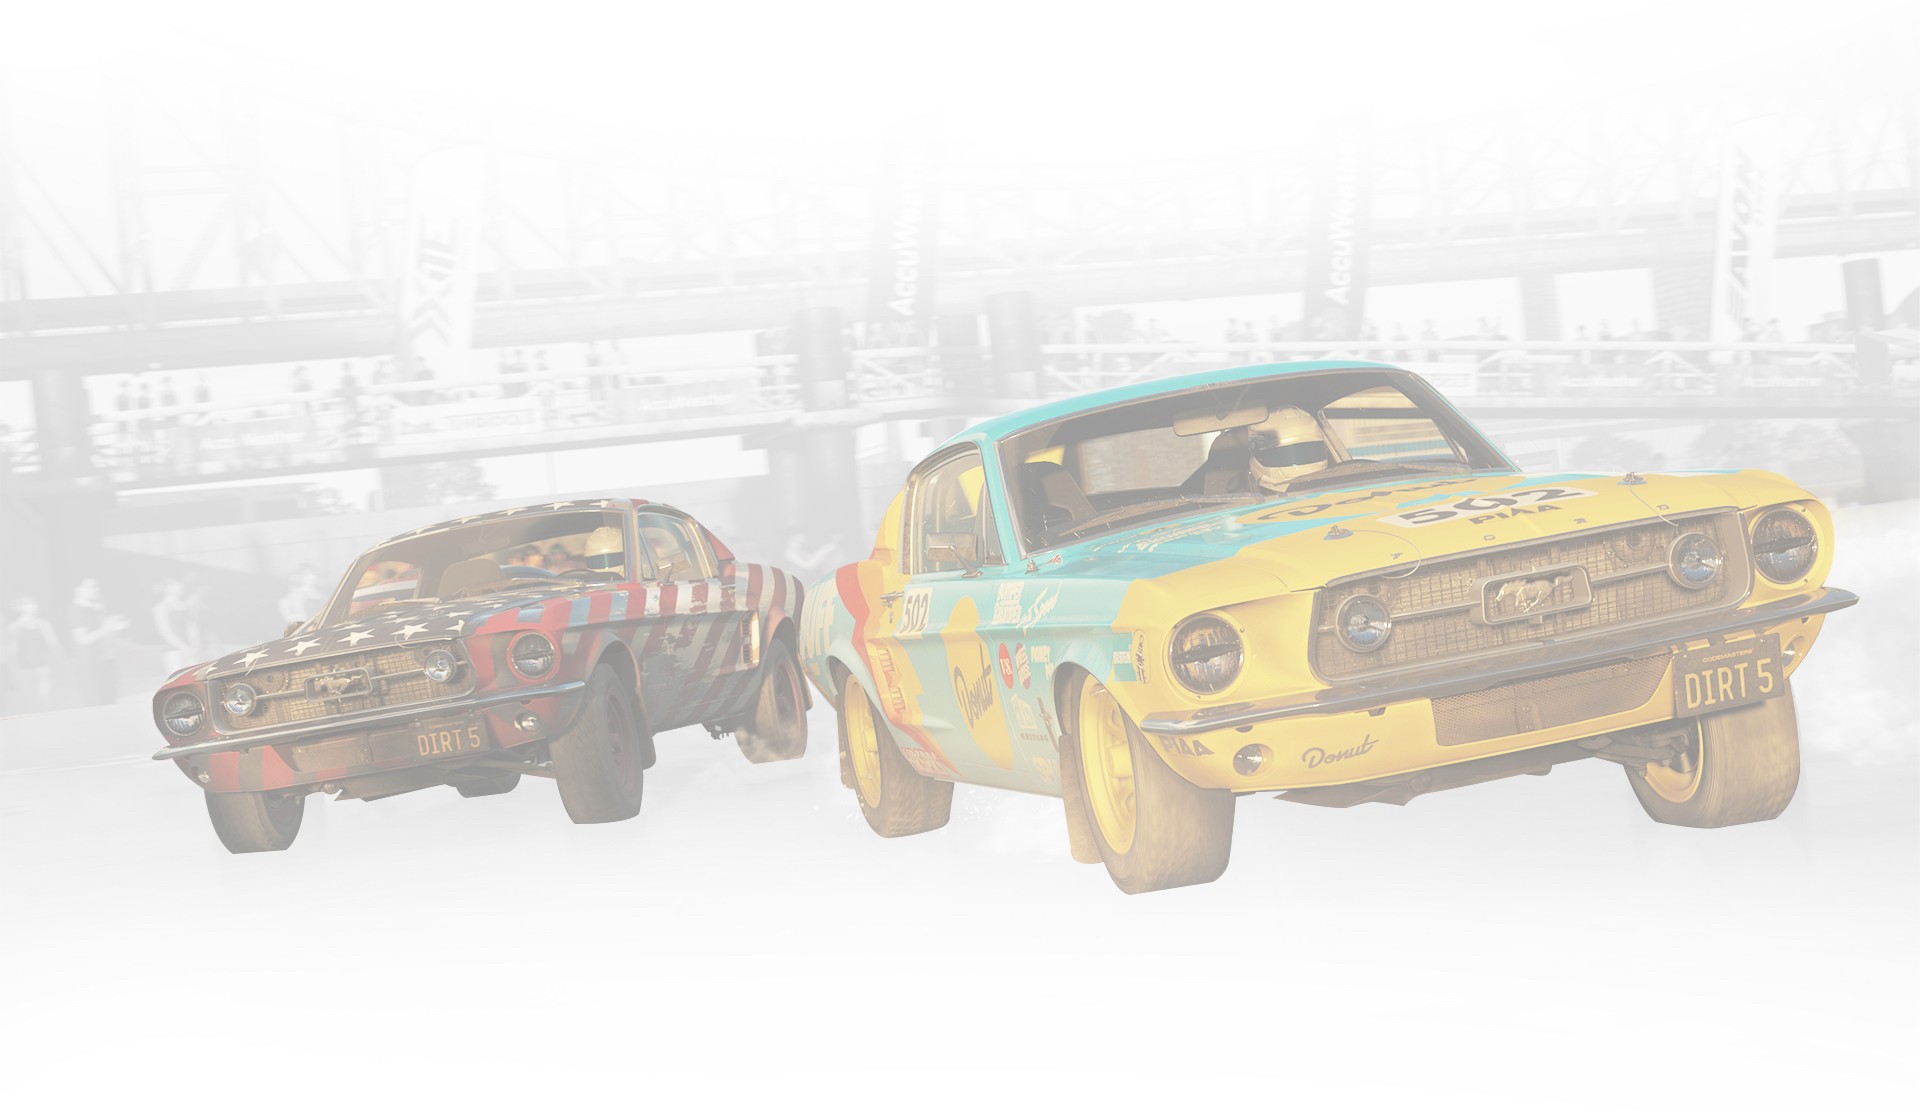 Dirt 5. Two Ford Mustangs race under an overpass.